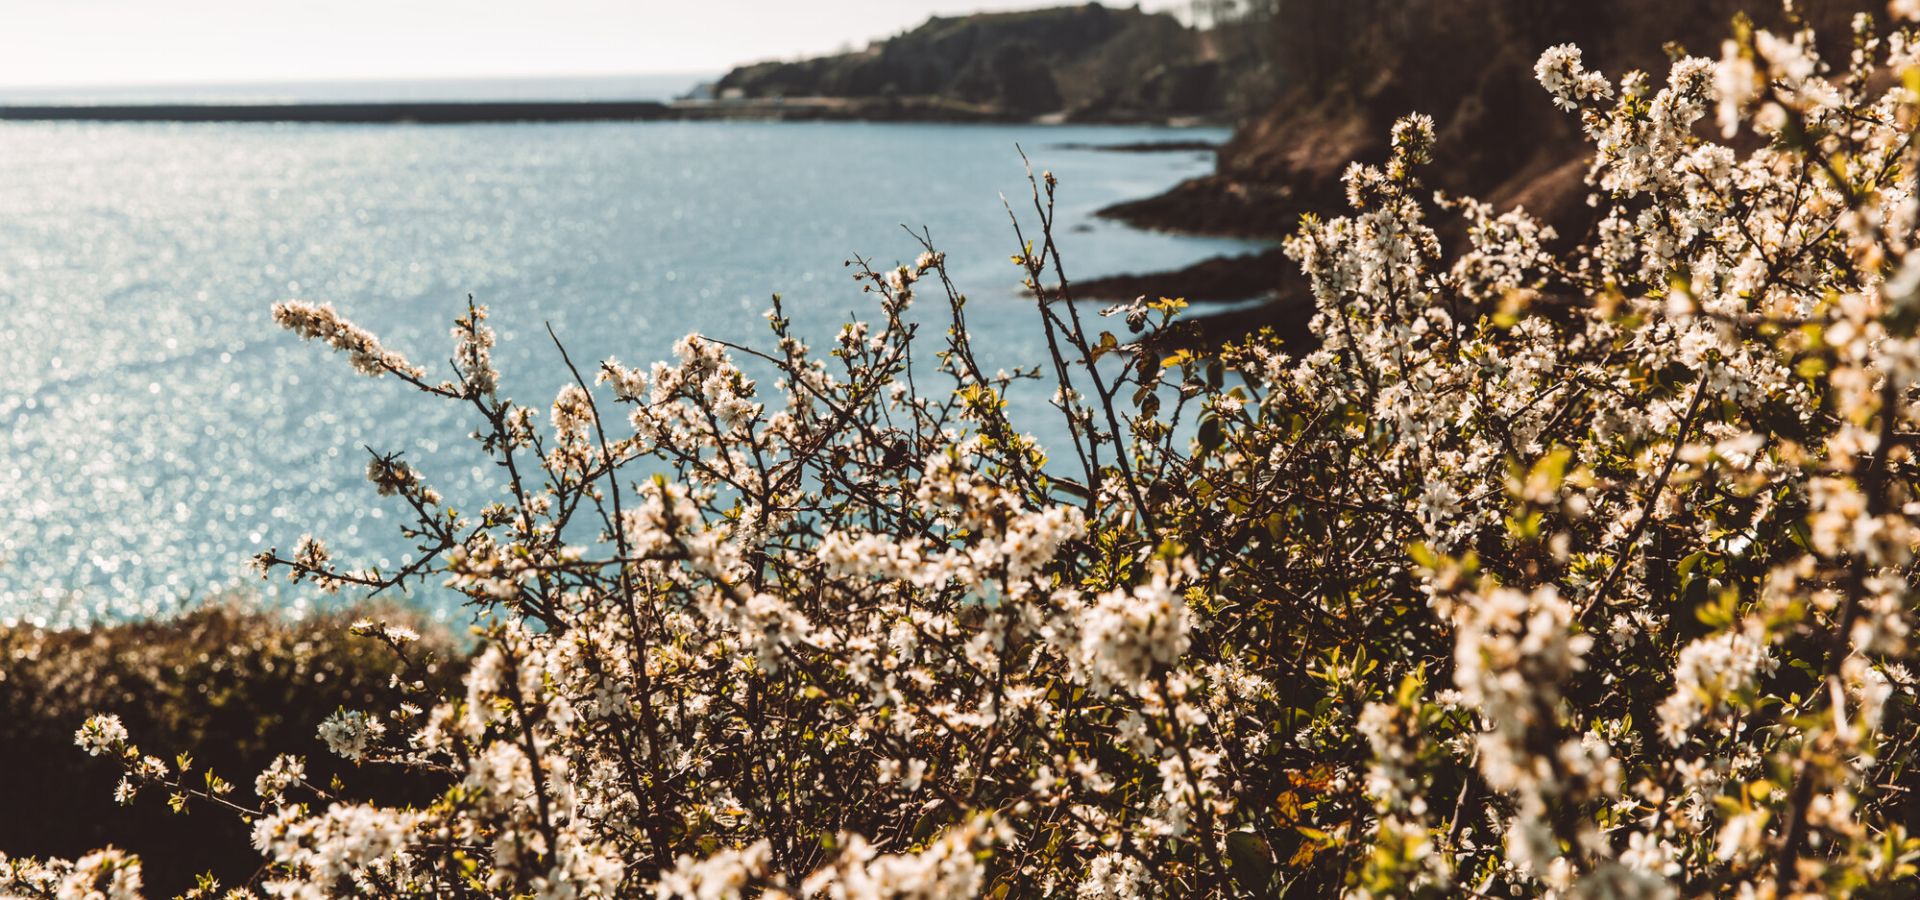 Spring flowers along a coastline